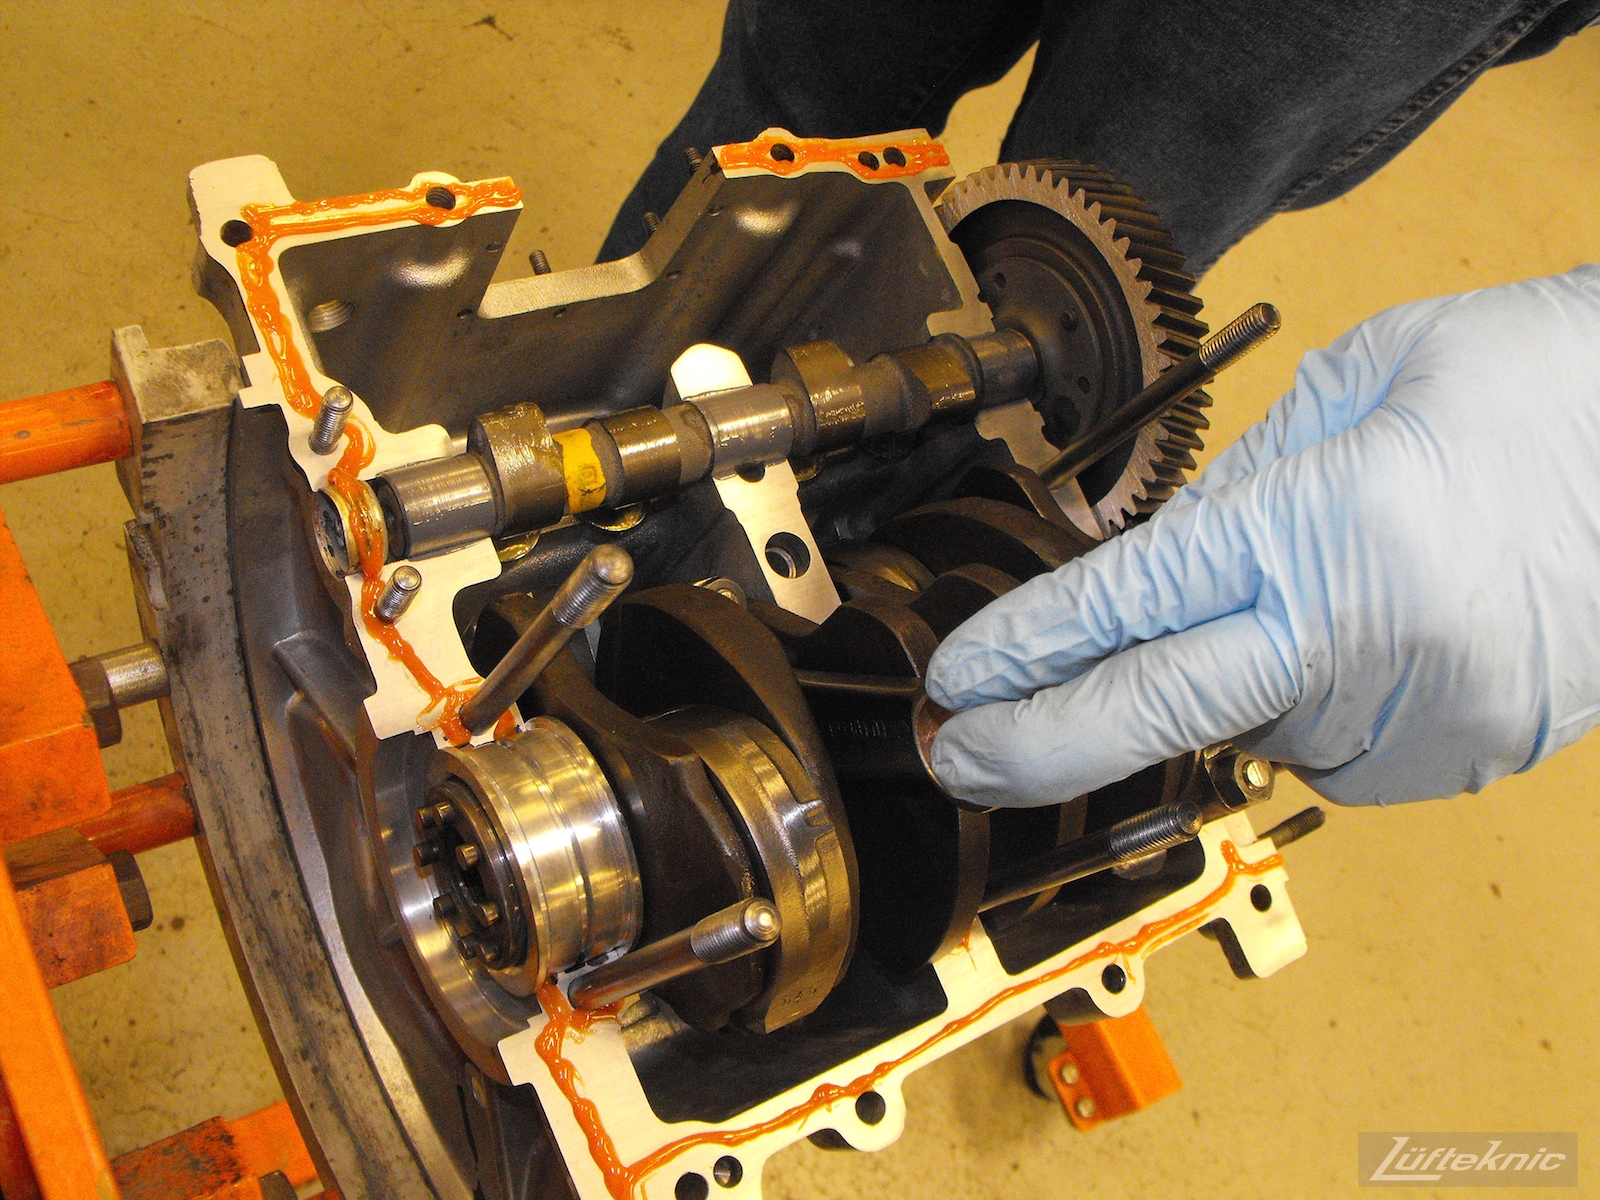 Engine assembly for an Irish Green Porsche 912 undergoing restoration at Lufteknic.